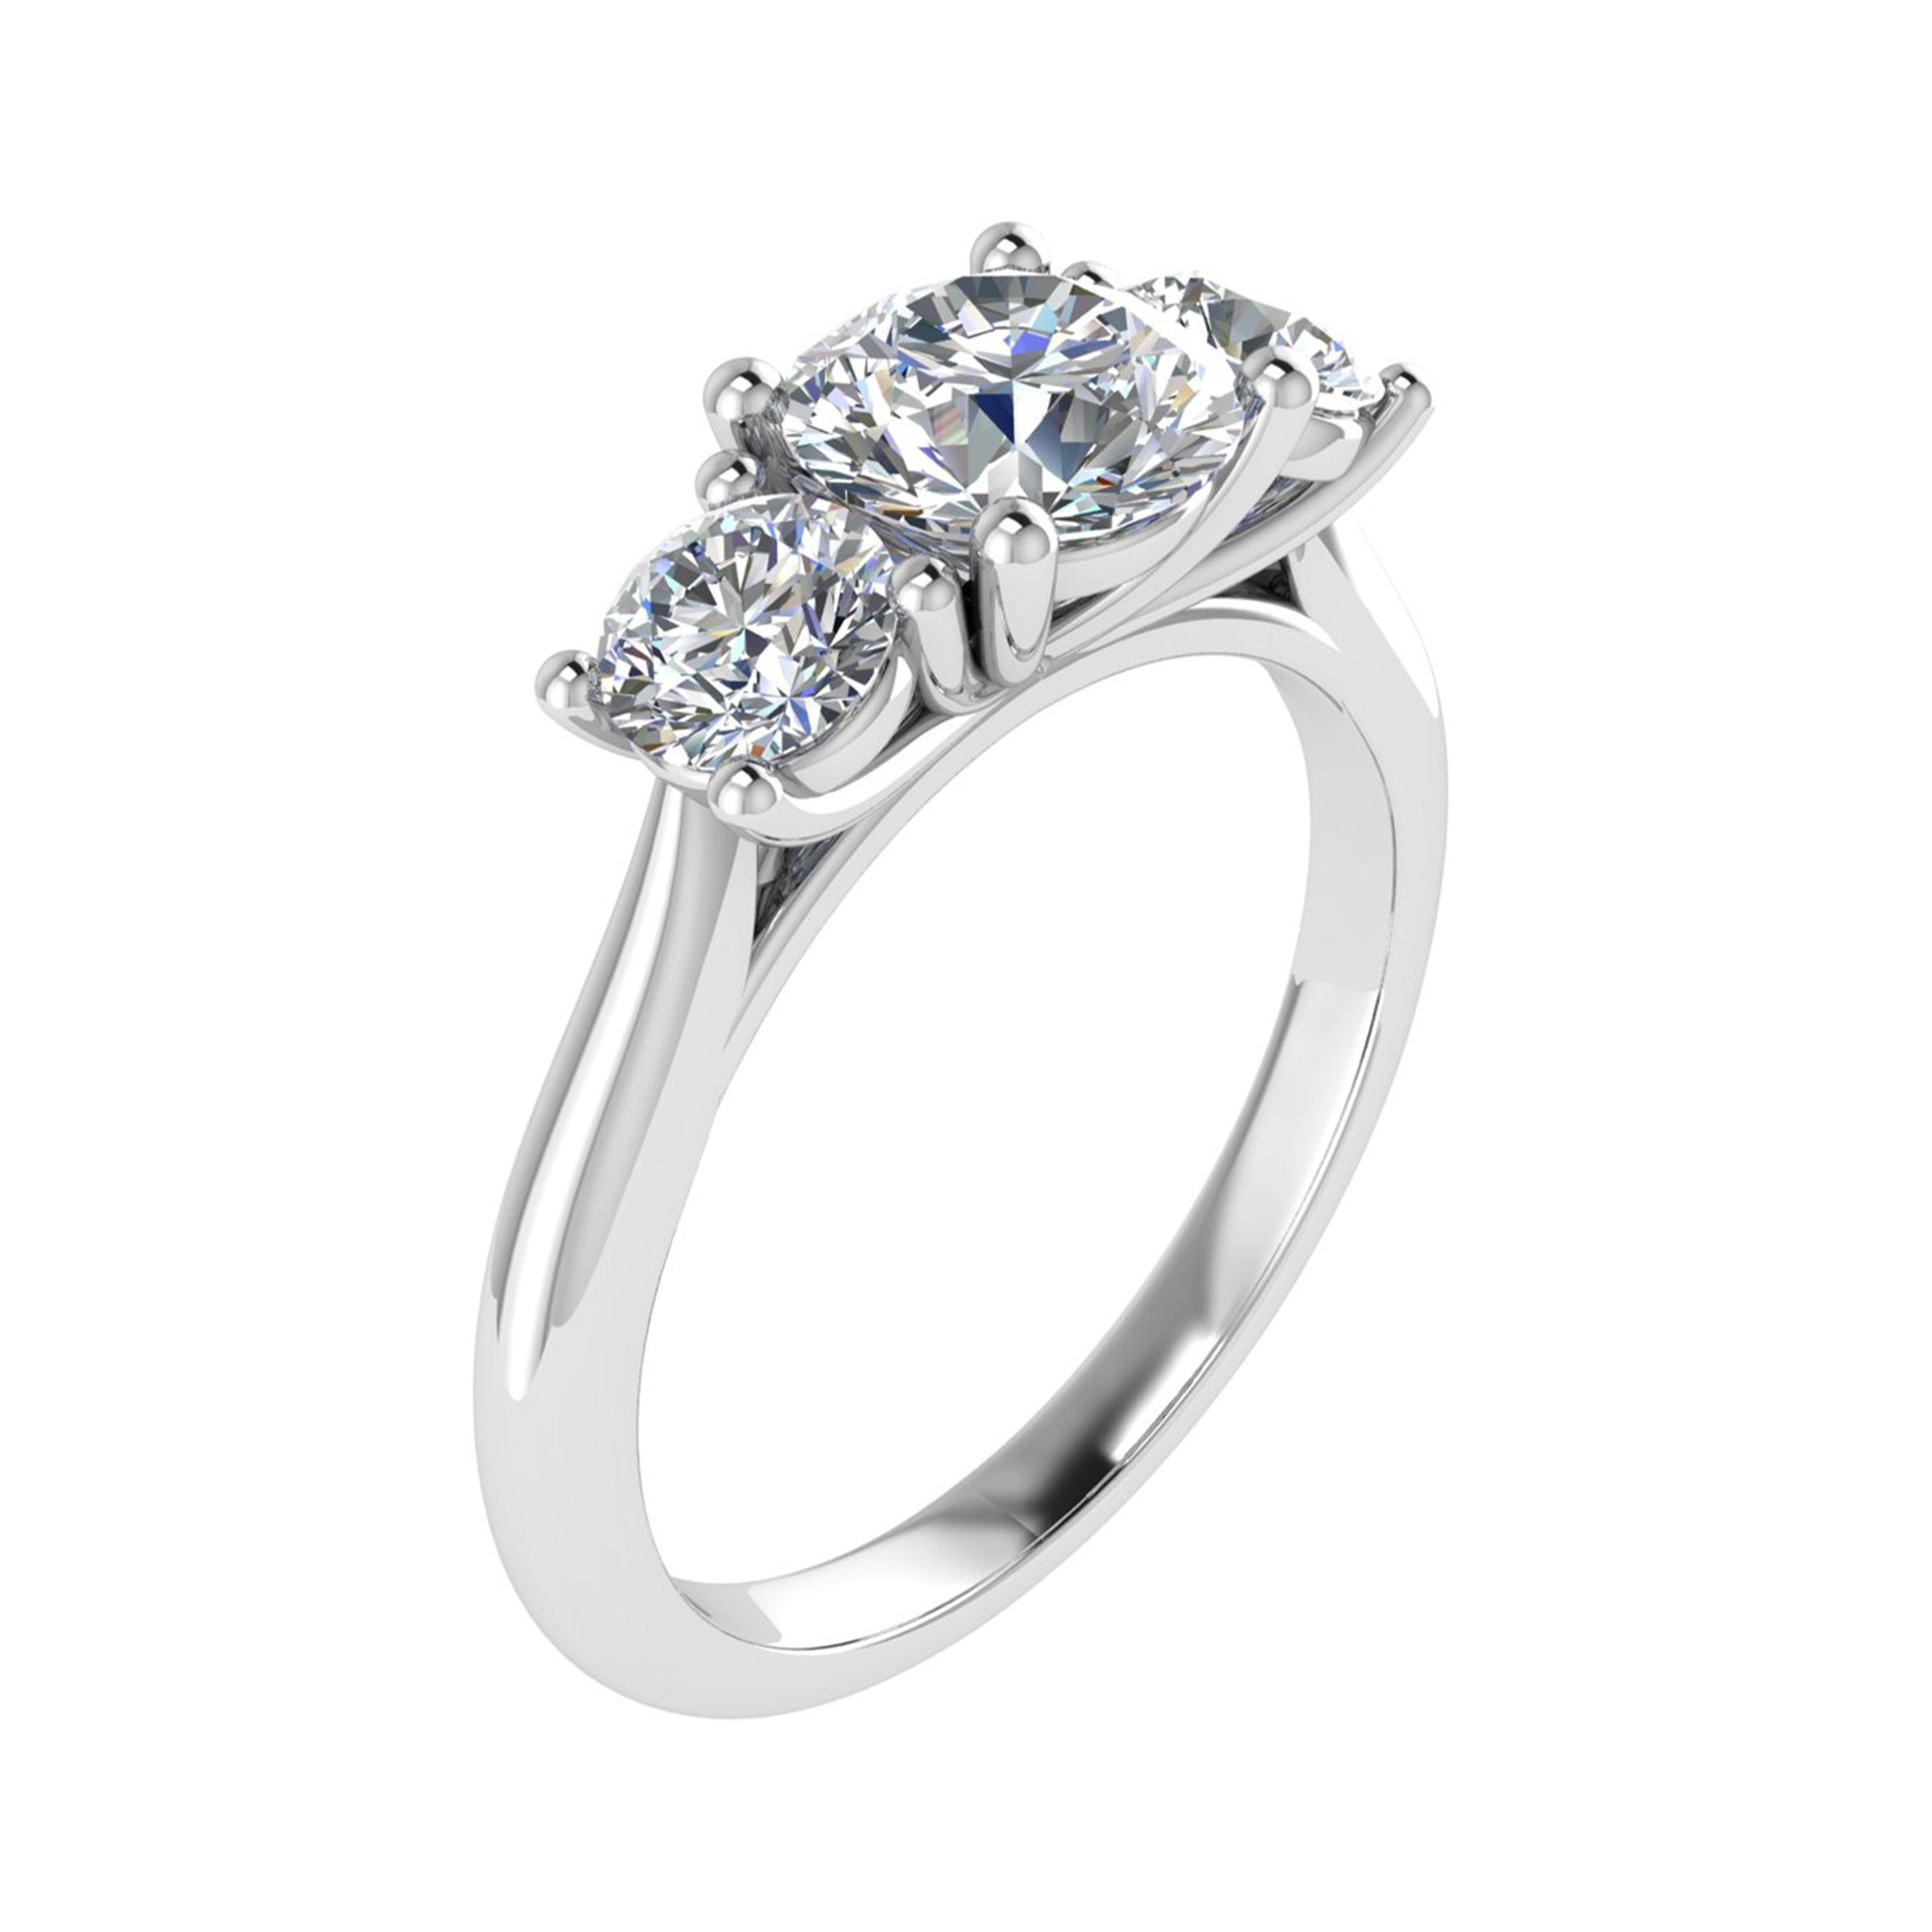 0.30 - 1.50 Carat Natural Diamond Trilogy Engagement Rings